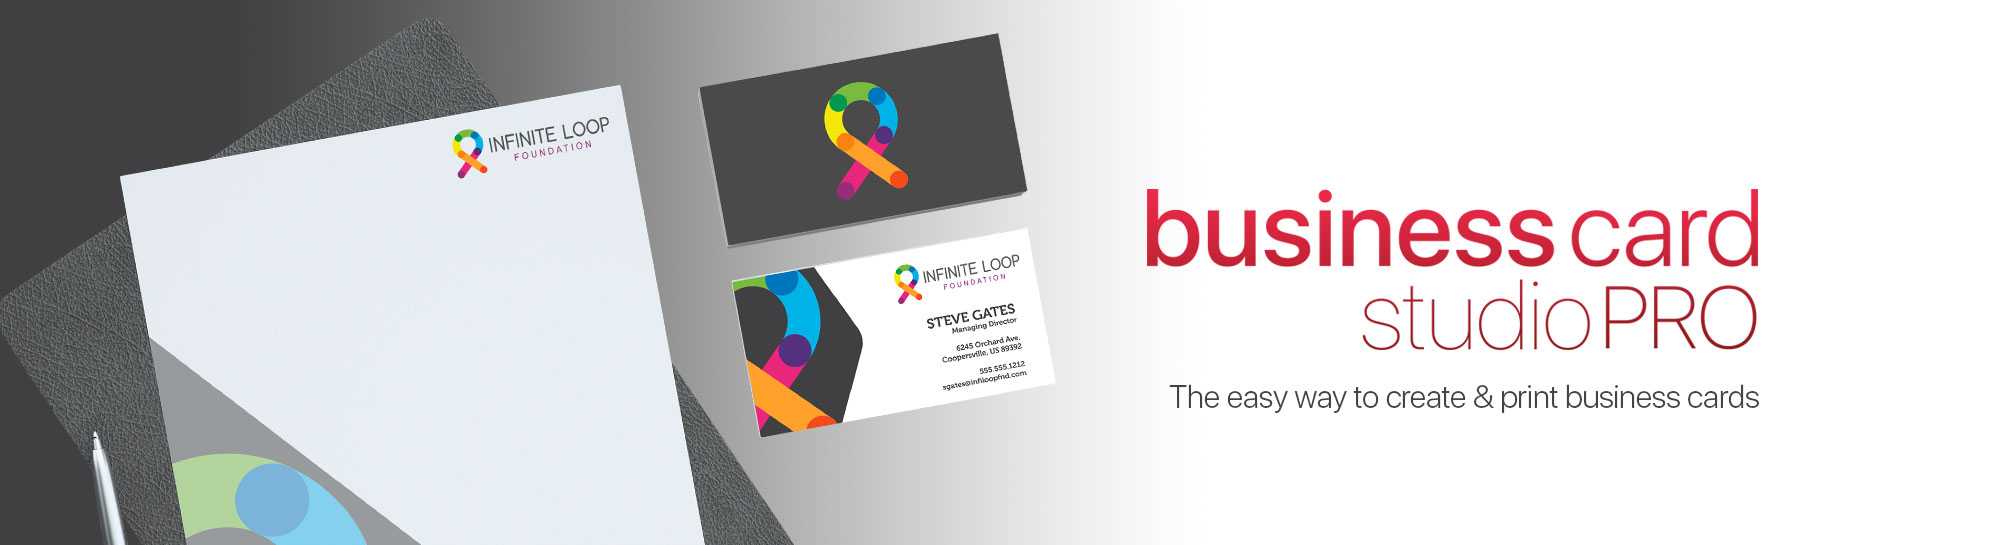 Business Card Studio Pro Softwaresummitsoft For Kinkos Business Card Template